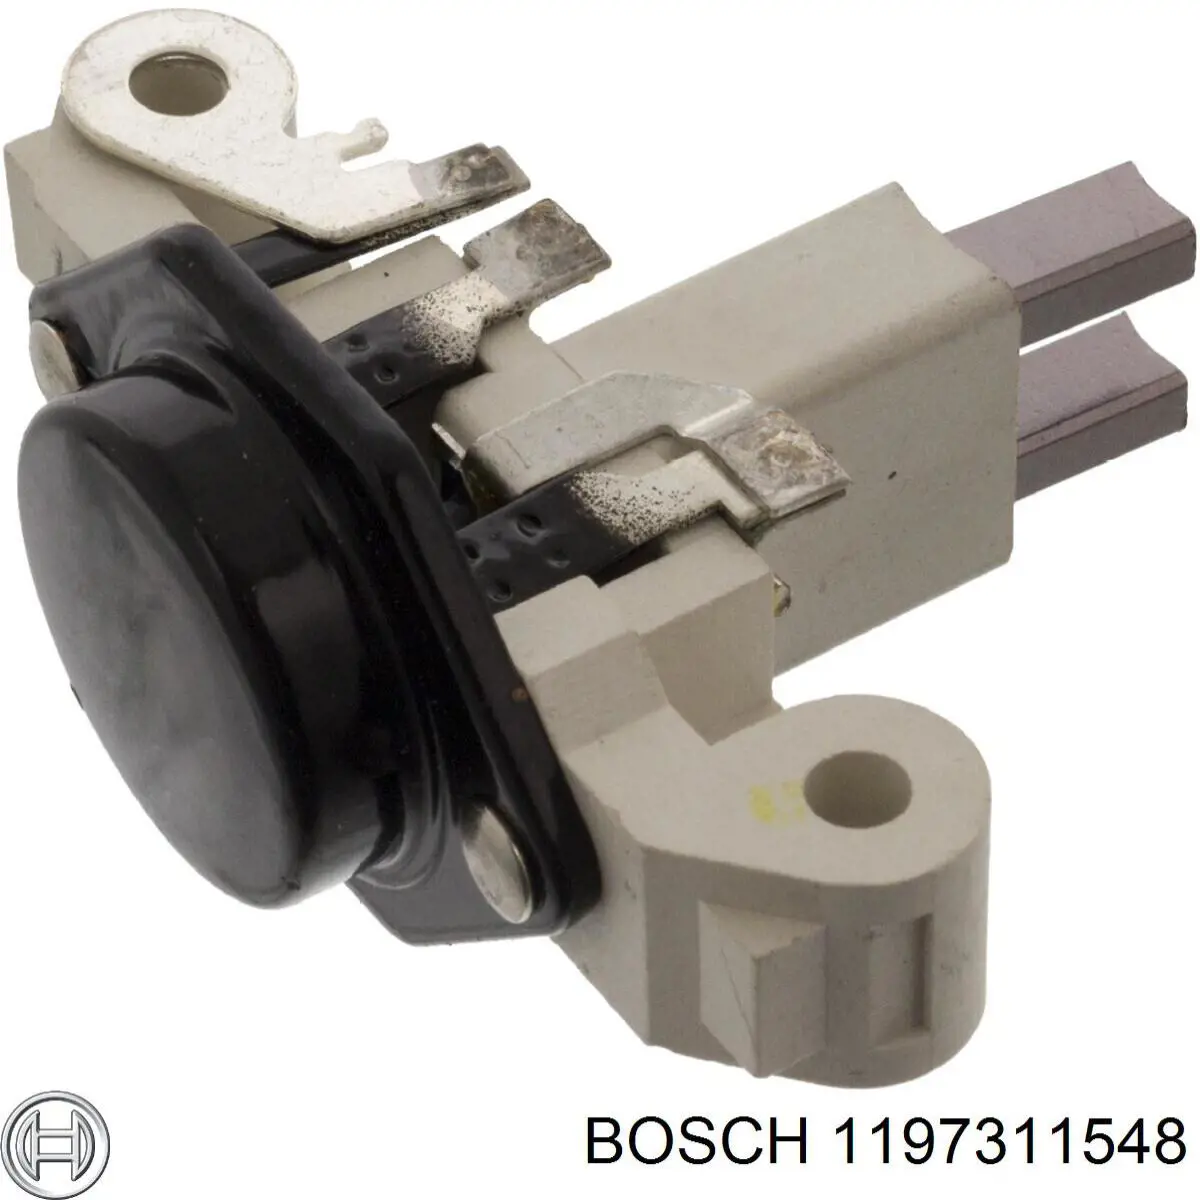 1197311548 Bosch regulador del alternador